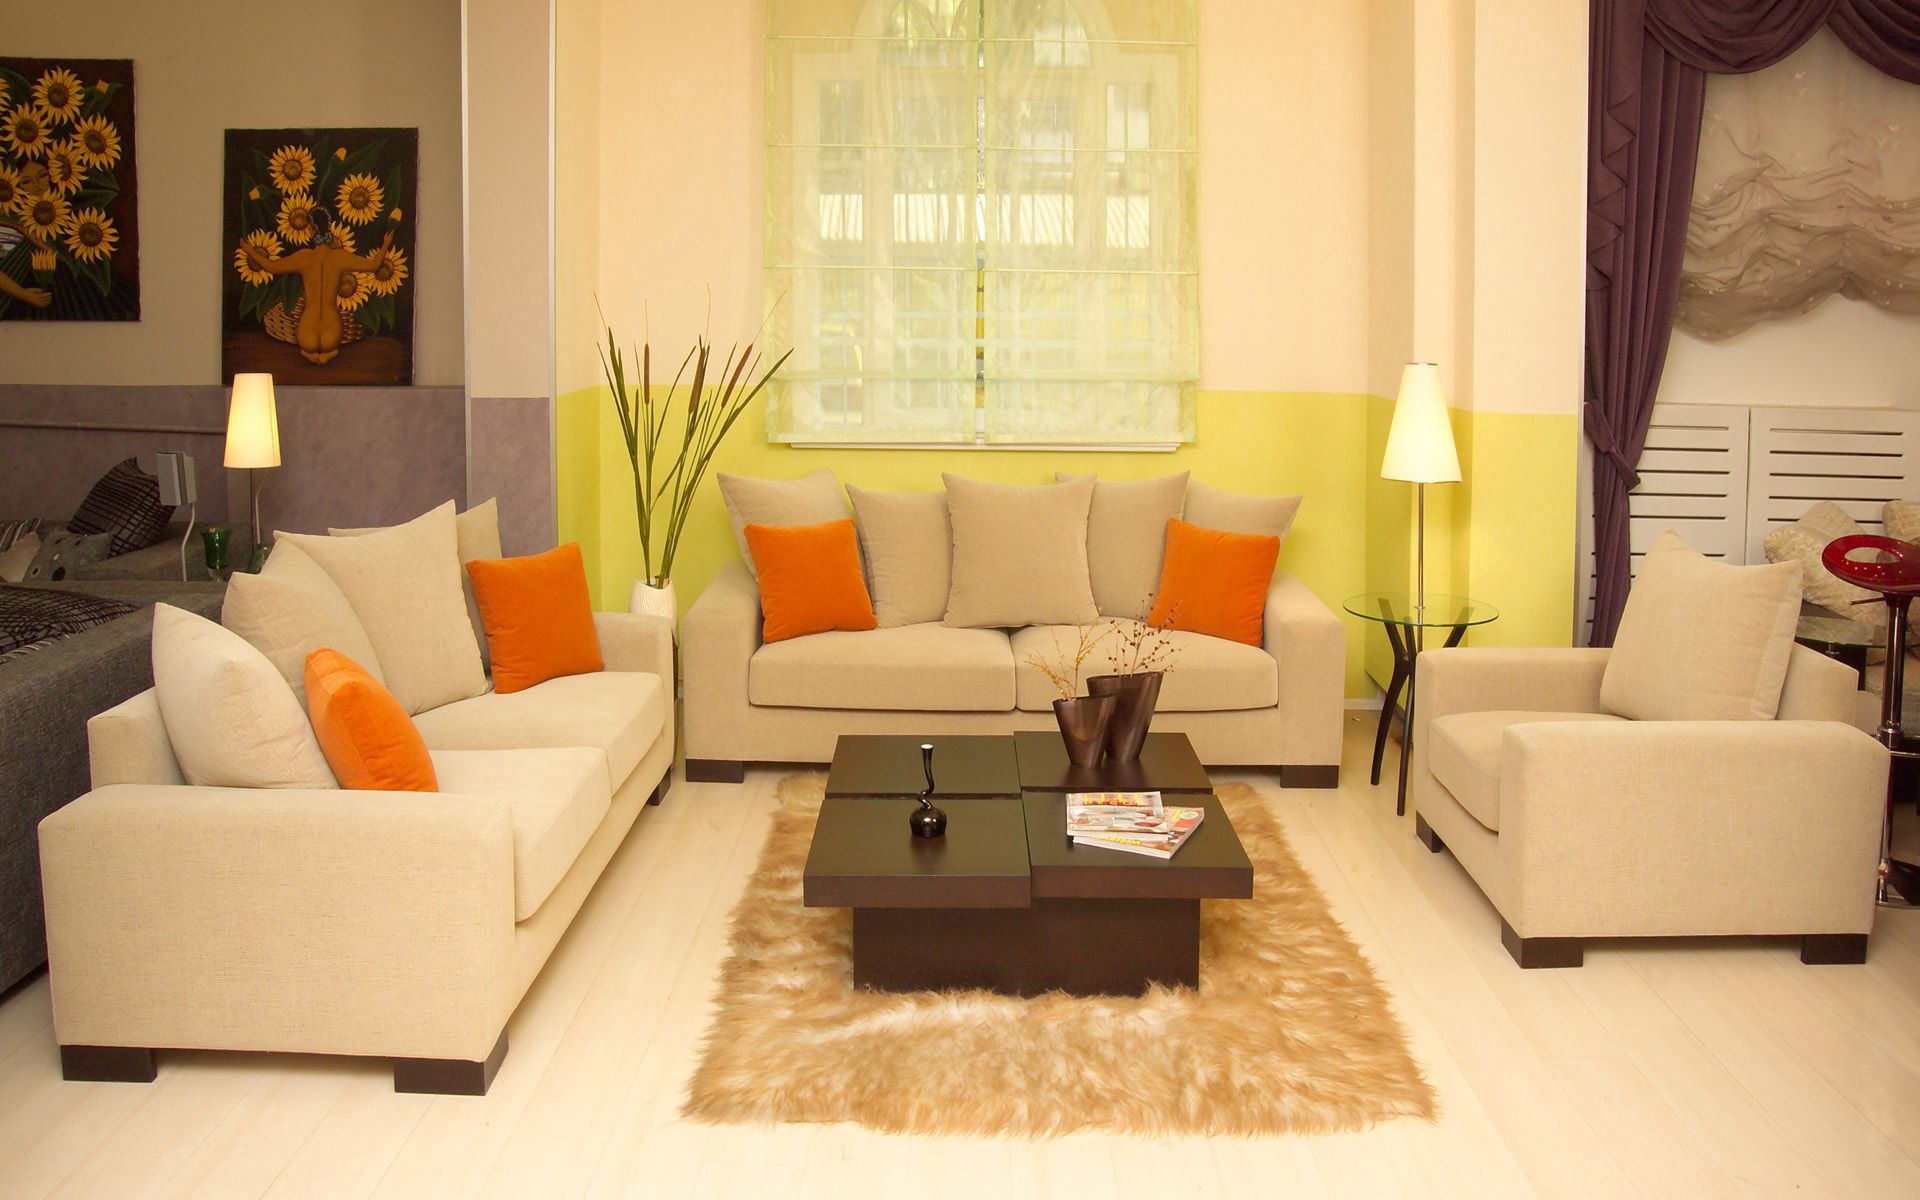 interior, miscellanea, miscellaneous, style, sofa, living room, cushions, pillows